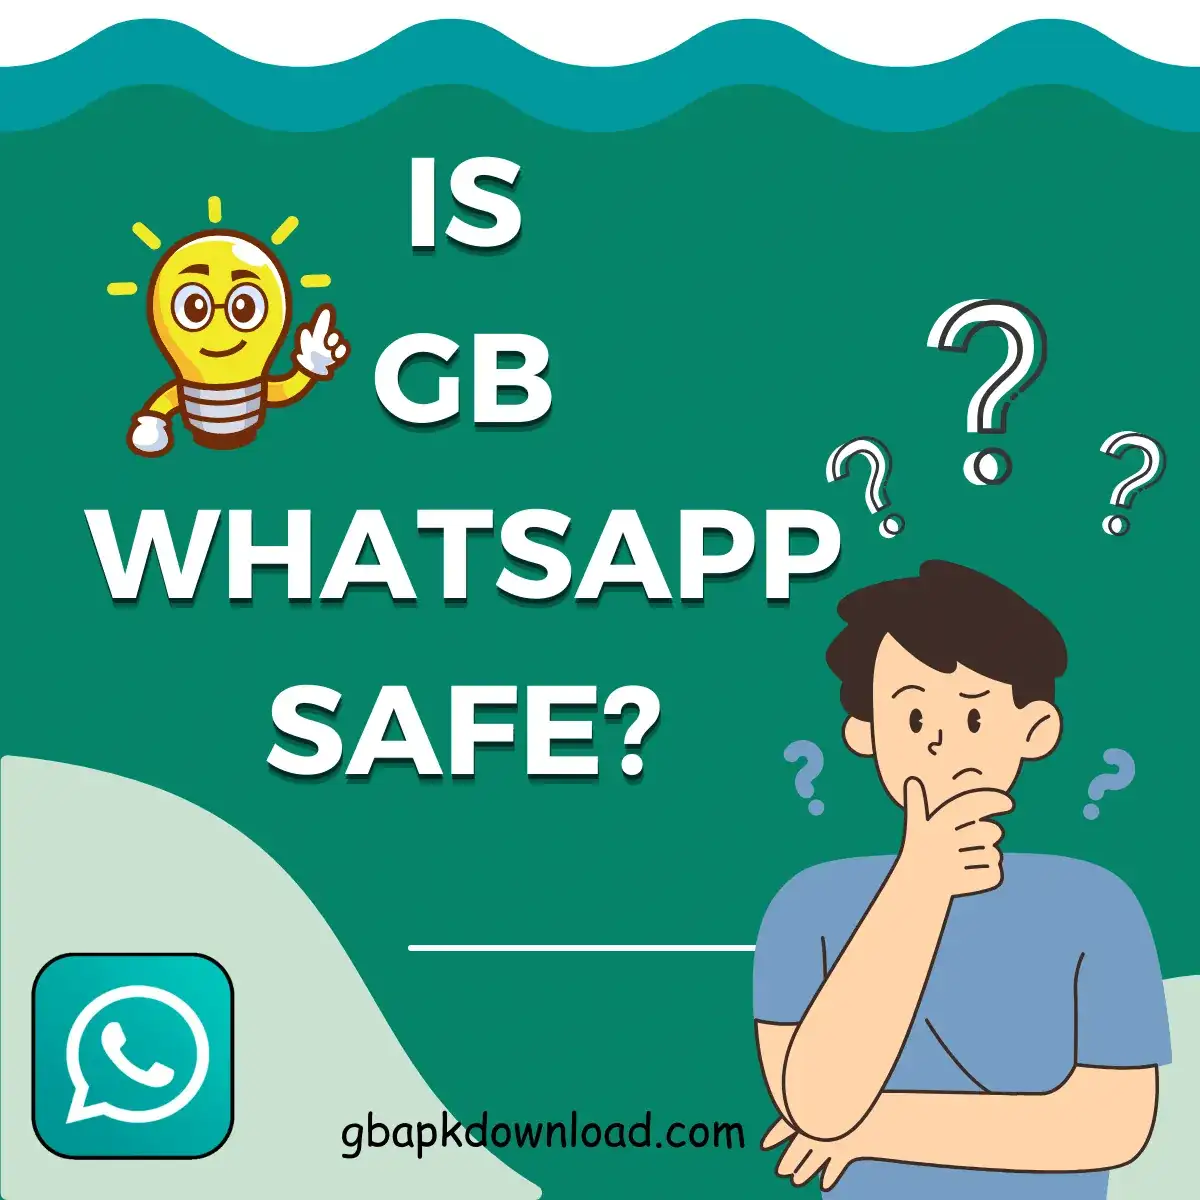 Is GB WhatsApp safe?